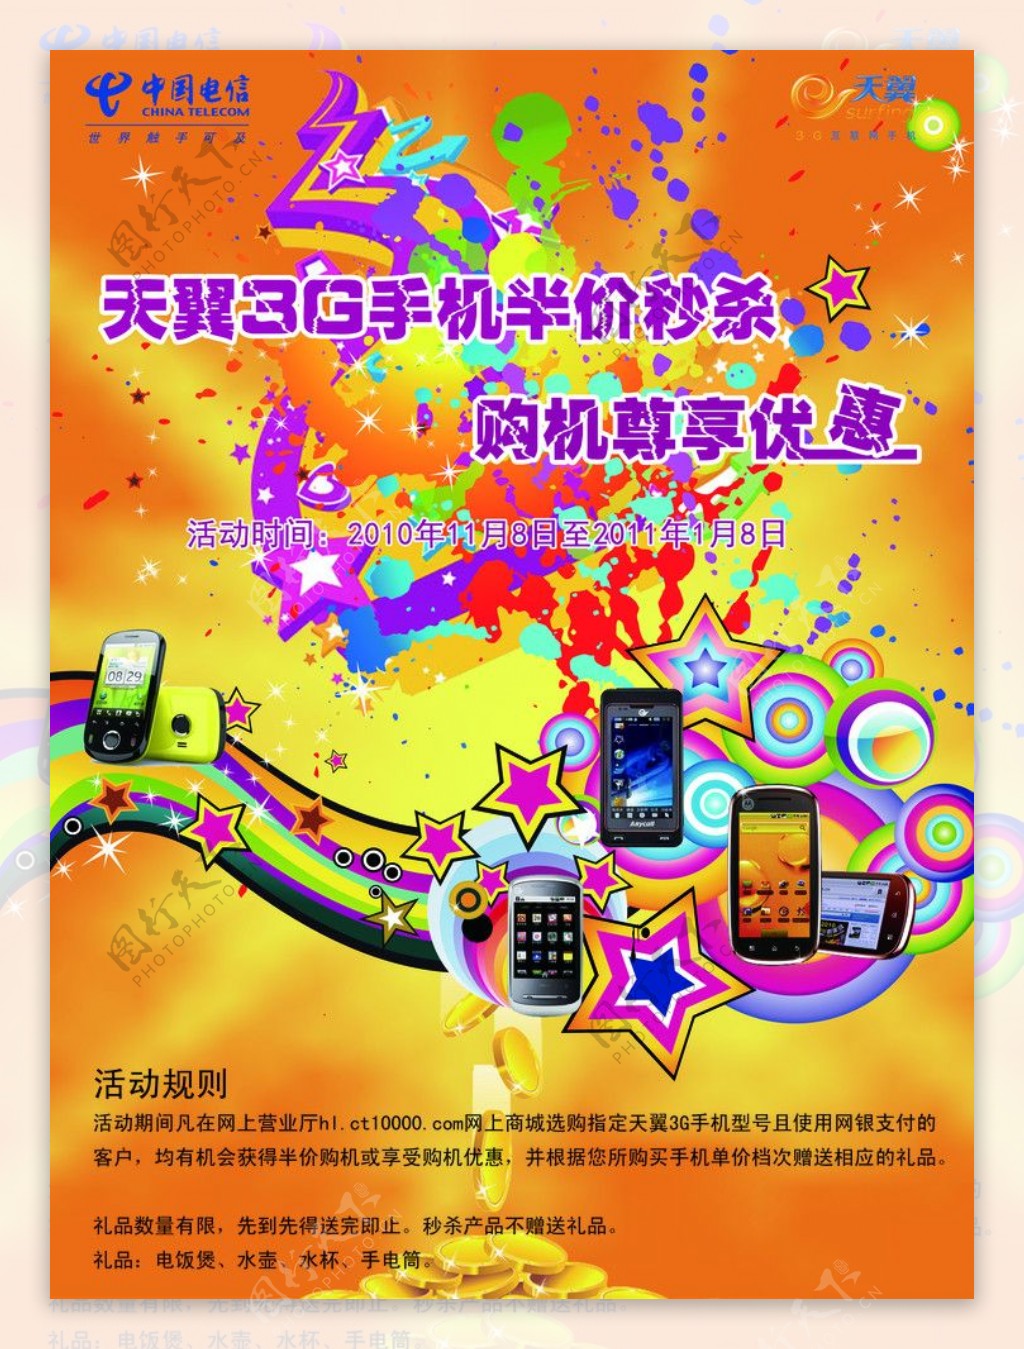 3G宣传海报图片